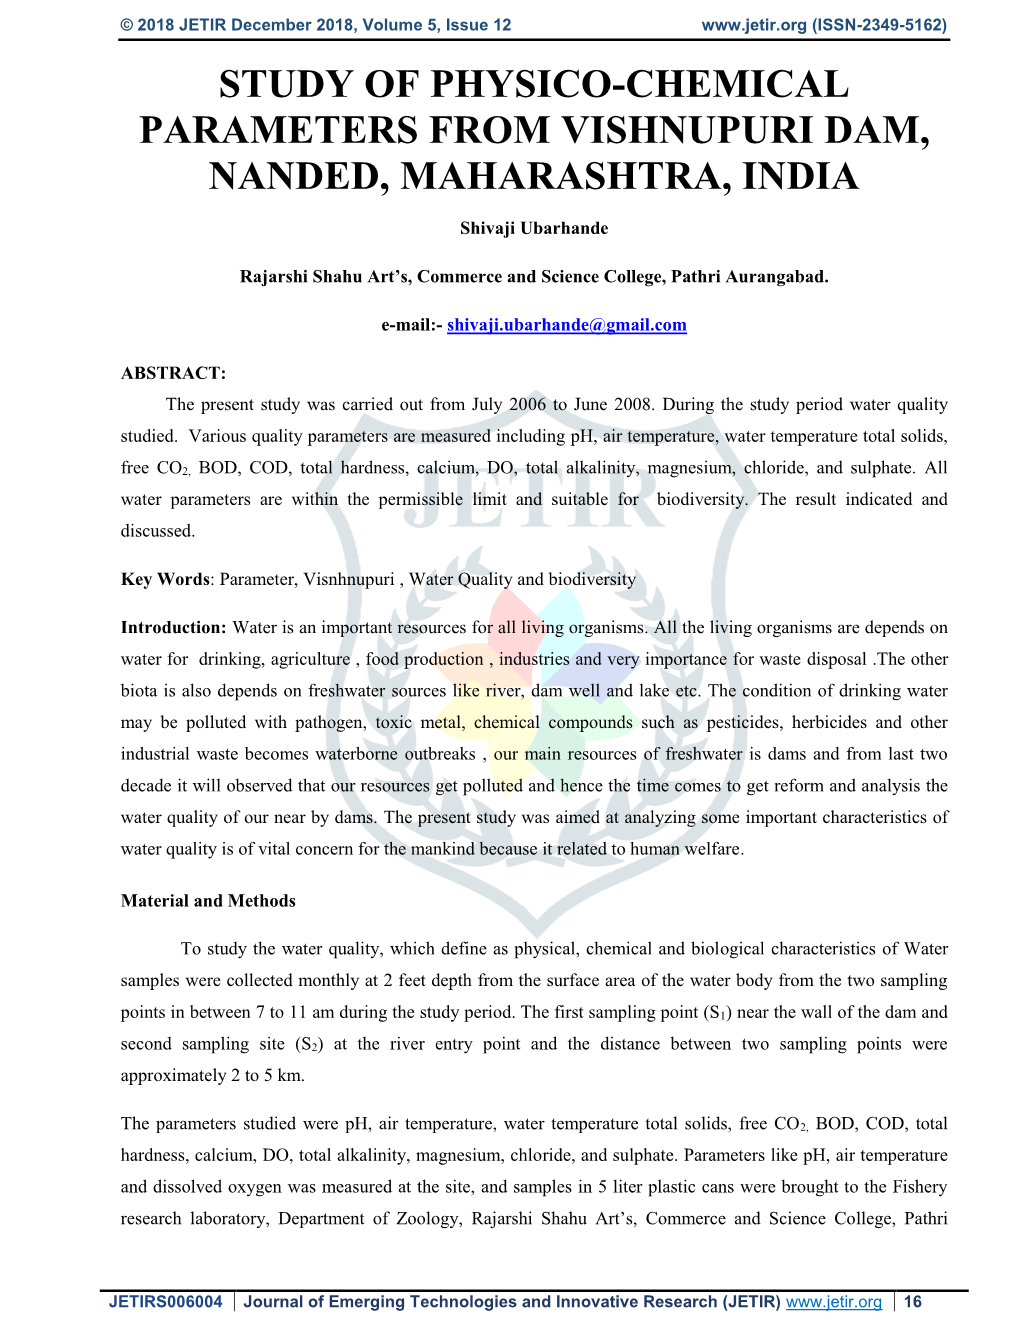 Study of Physico-Chemical Parameters from Vishnupuri Dam, Nanded, Maharashtra, India